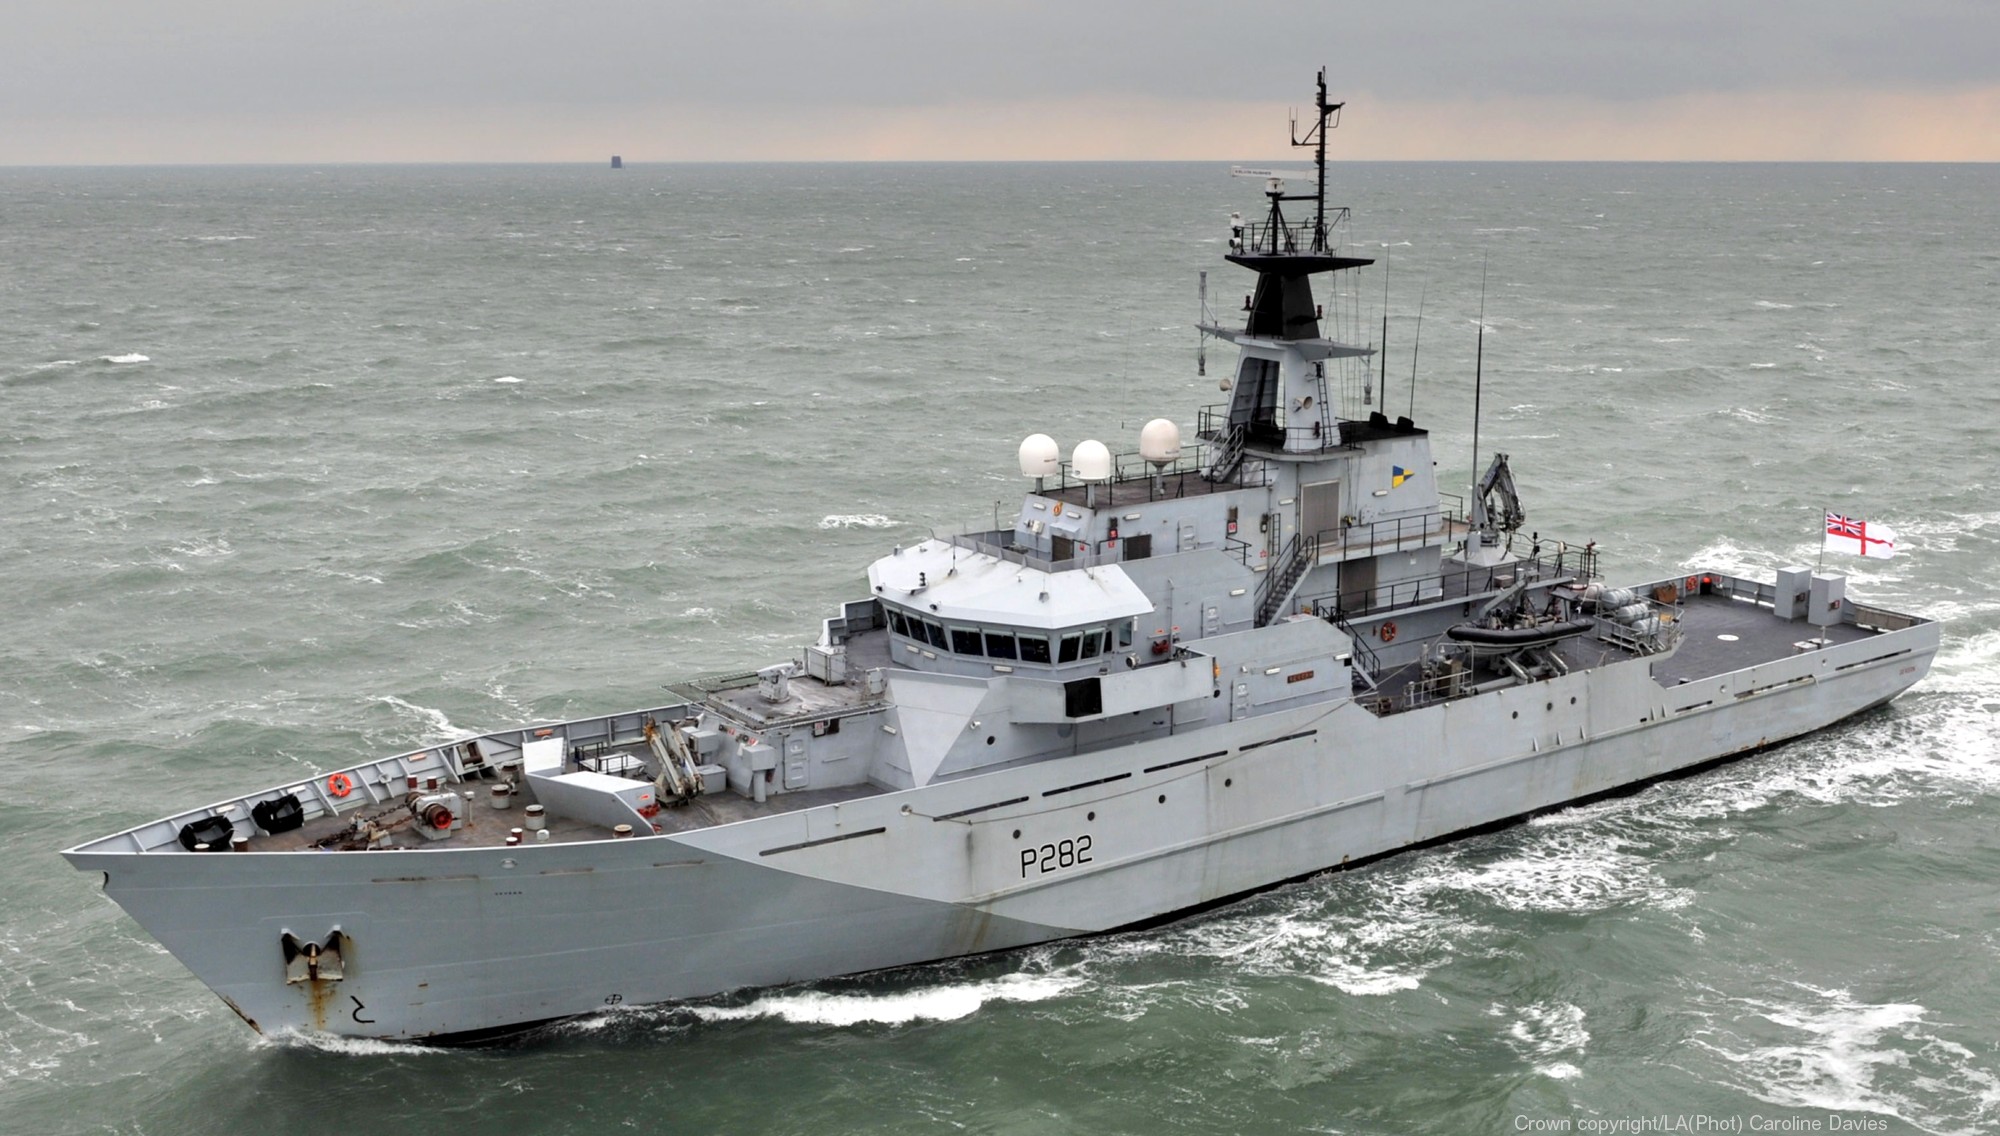 p282 hms severn river class offshore patrol vessel opv royal navy 09x vosper thornycroft